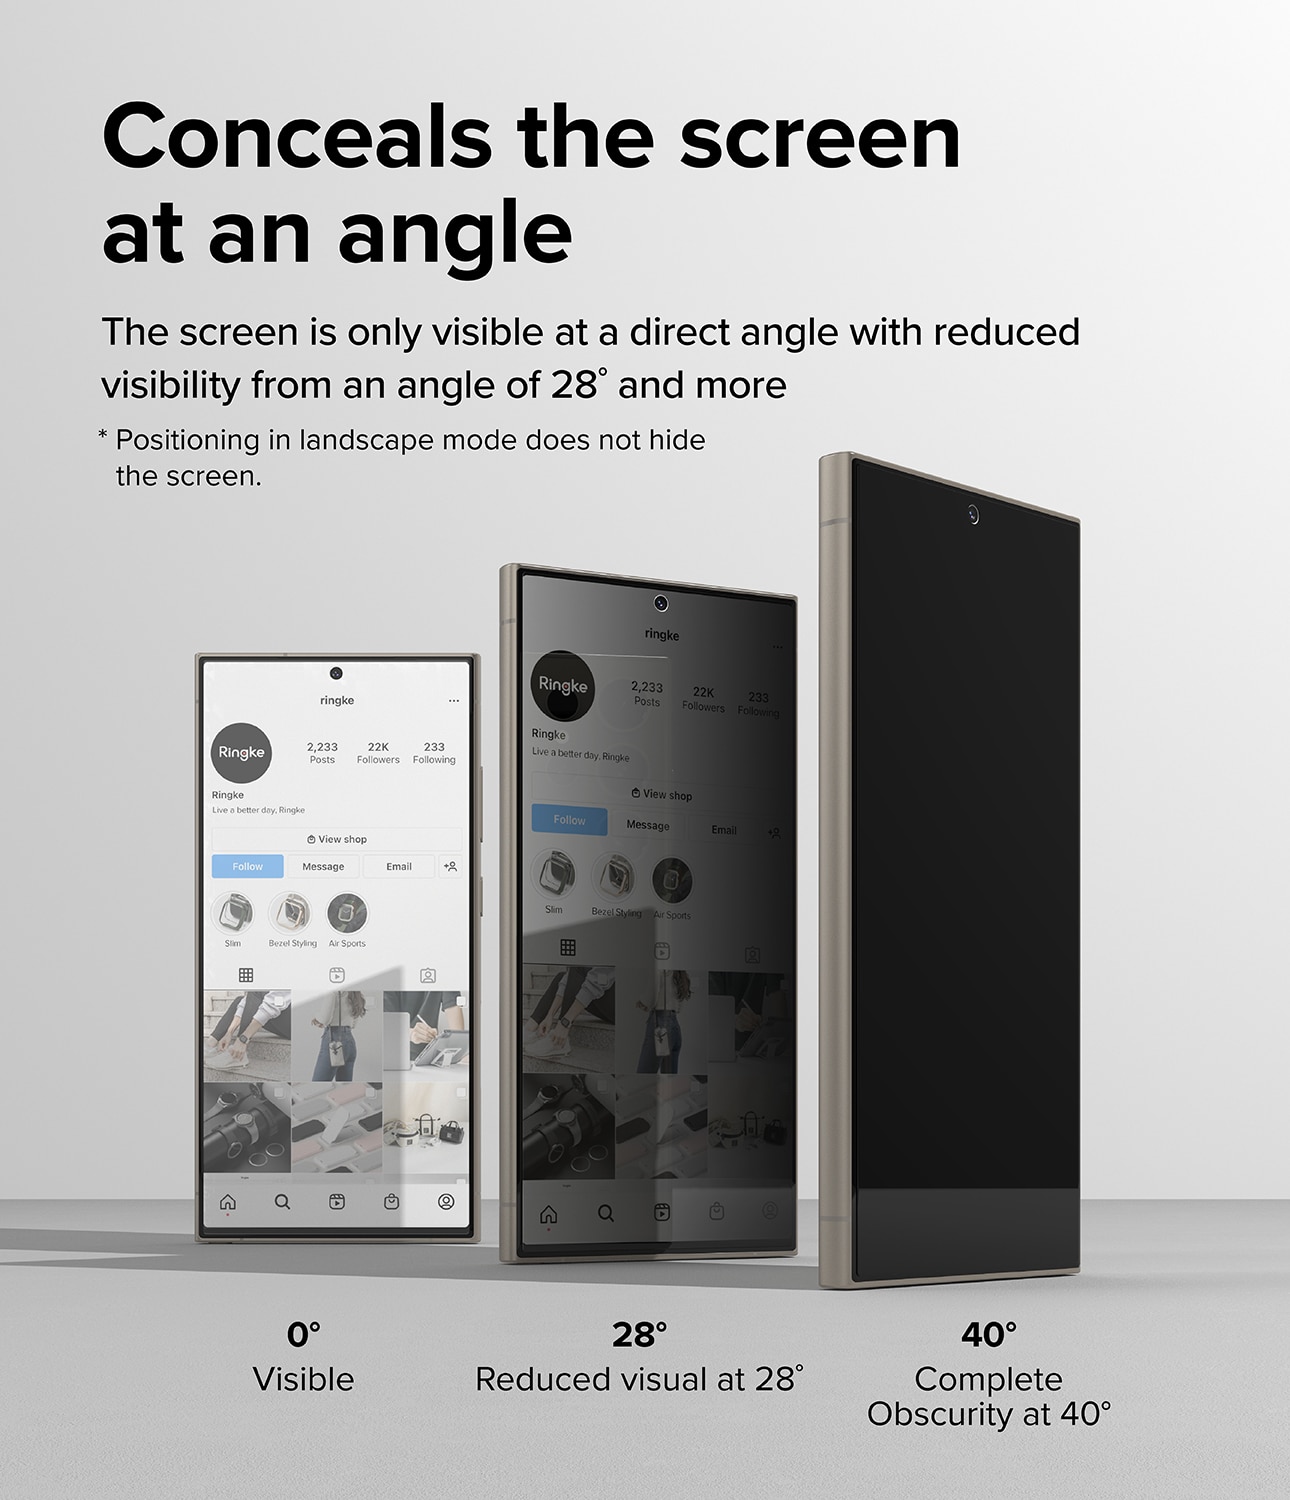 Easy Slide Privacy Glass (2 pièces) Samsung Galaxy S24 Ultra